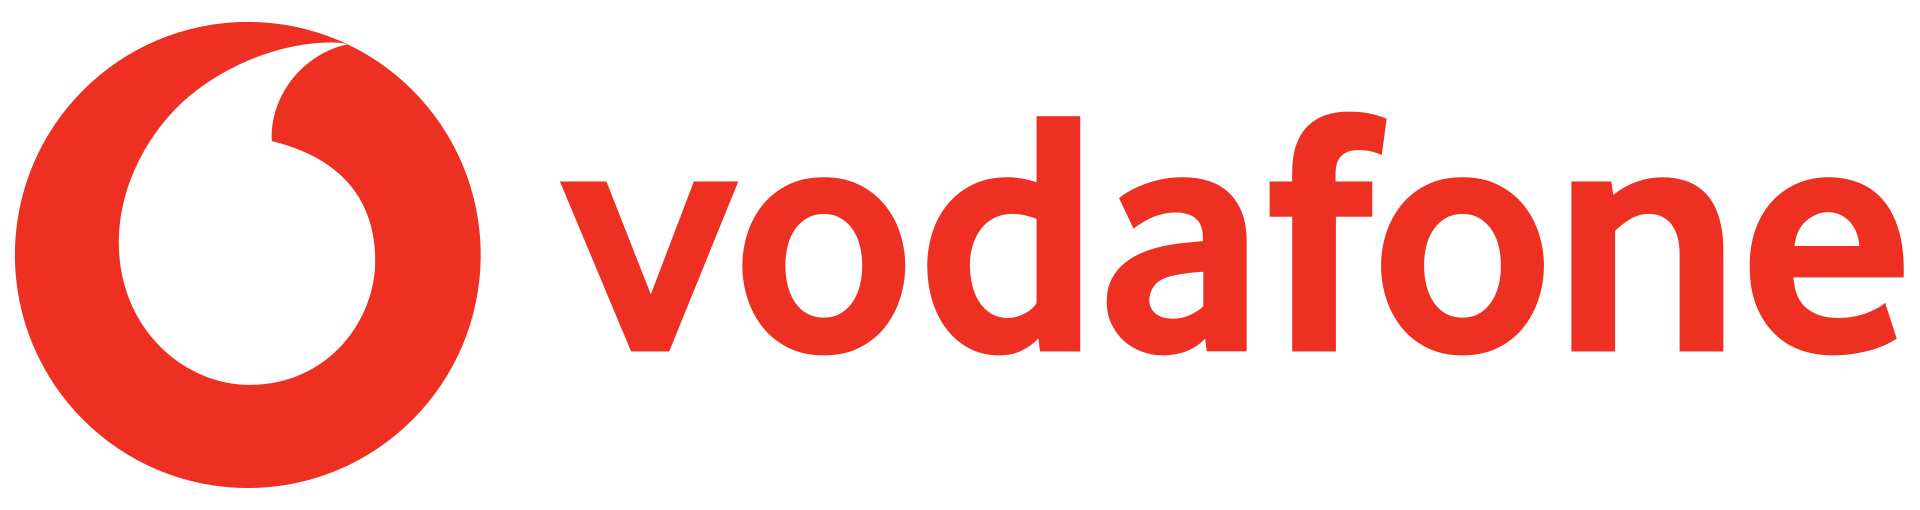 Vodafone India - Vodafone Essar - Hutchison Essar